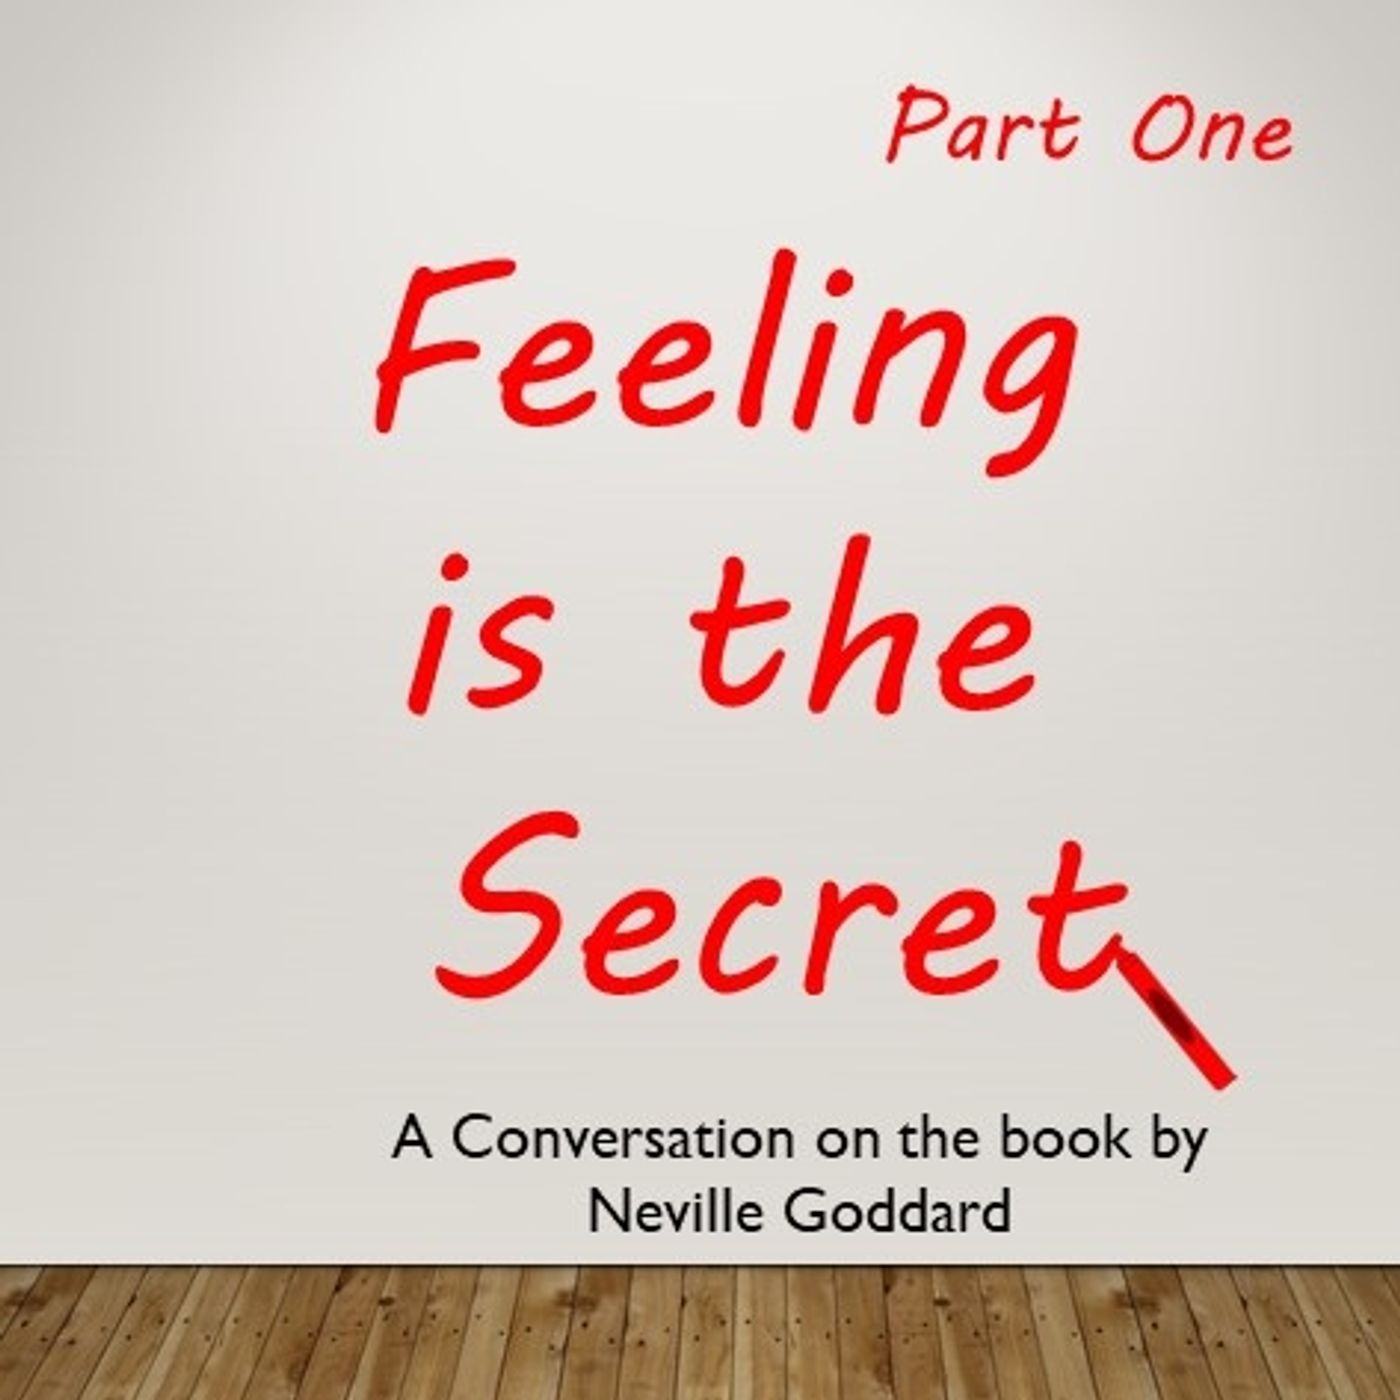 Neville Goddard - Feeling is the Secret - A Conversation - Part One